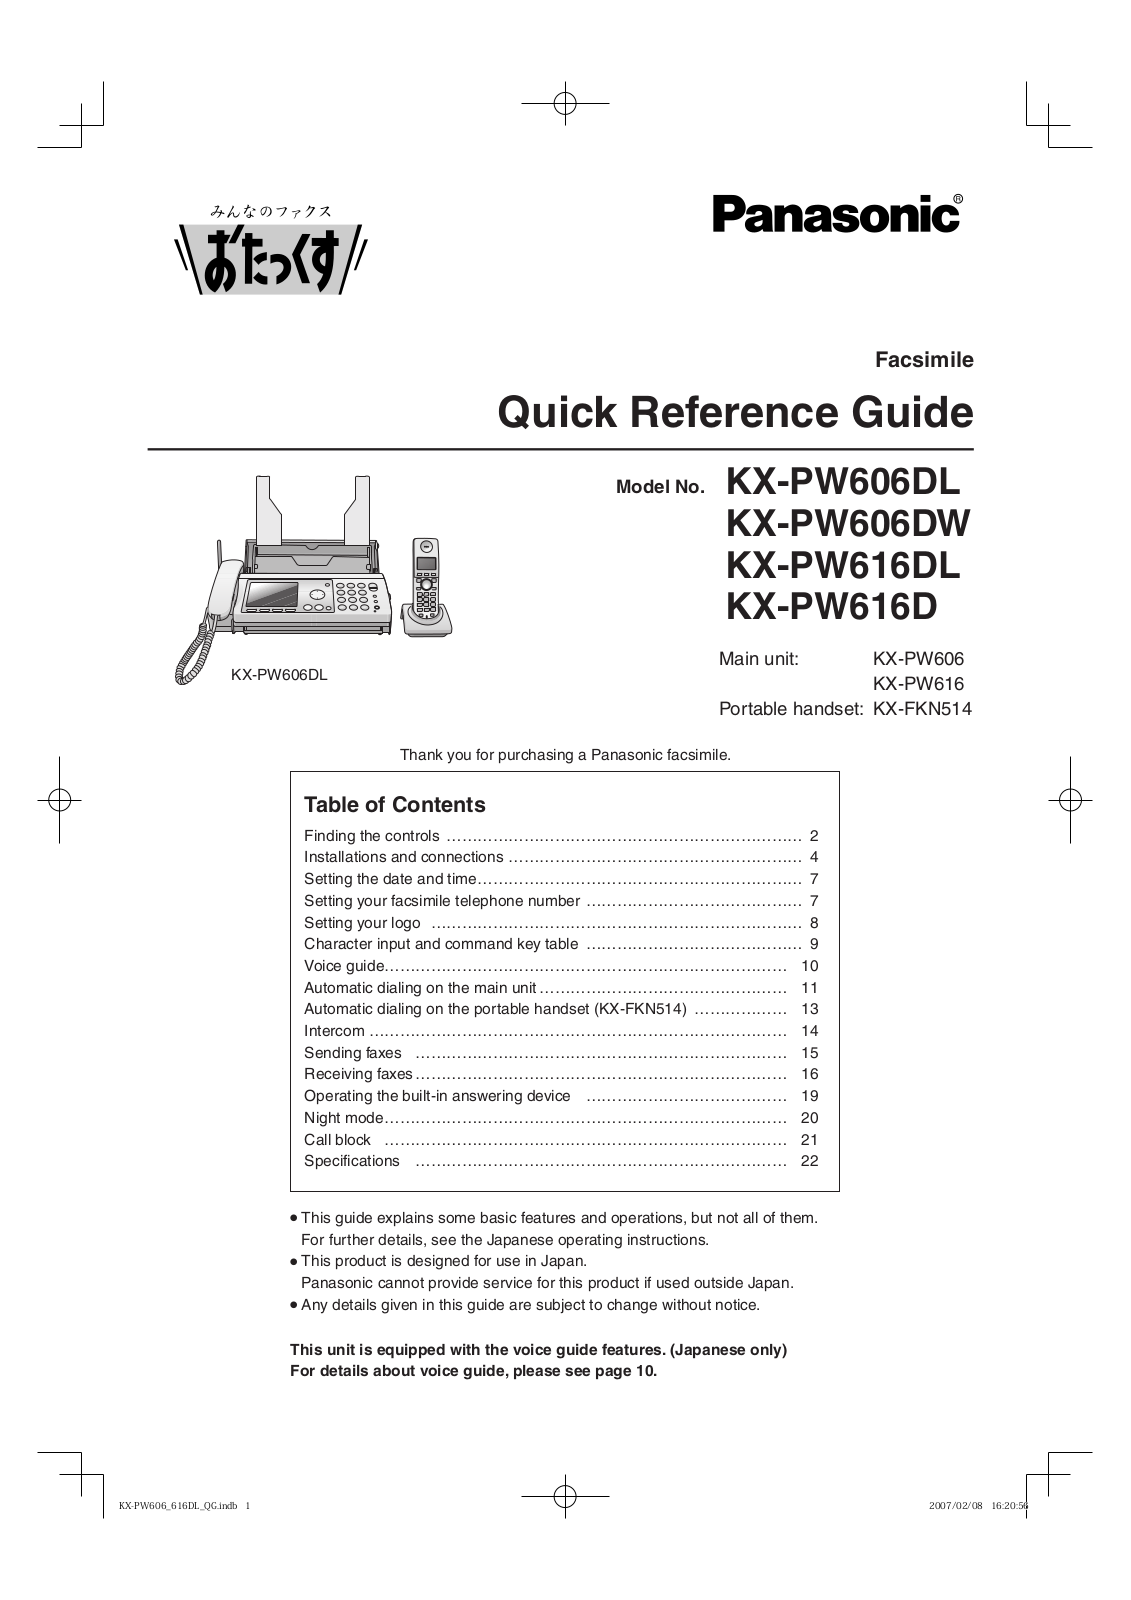 Panasonic KX-FKN514, KX-PW606DW, KX-PW616, KX-PW606, KX-PW606DL User Manual